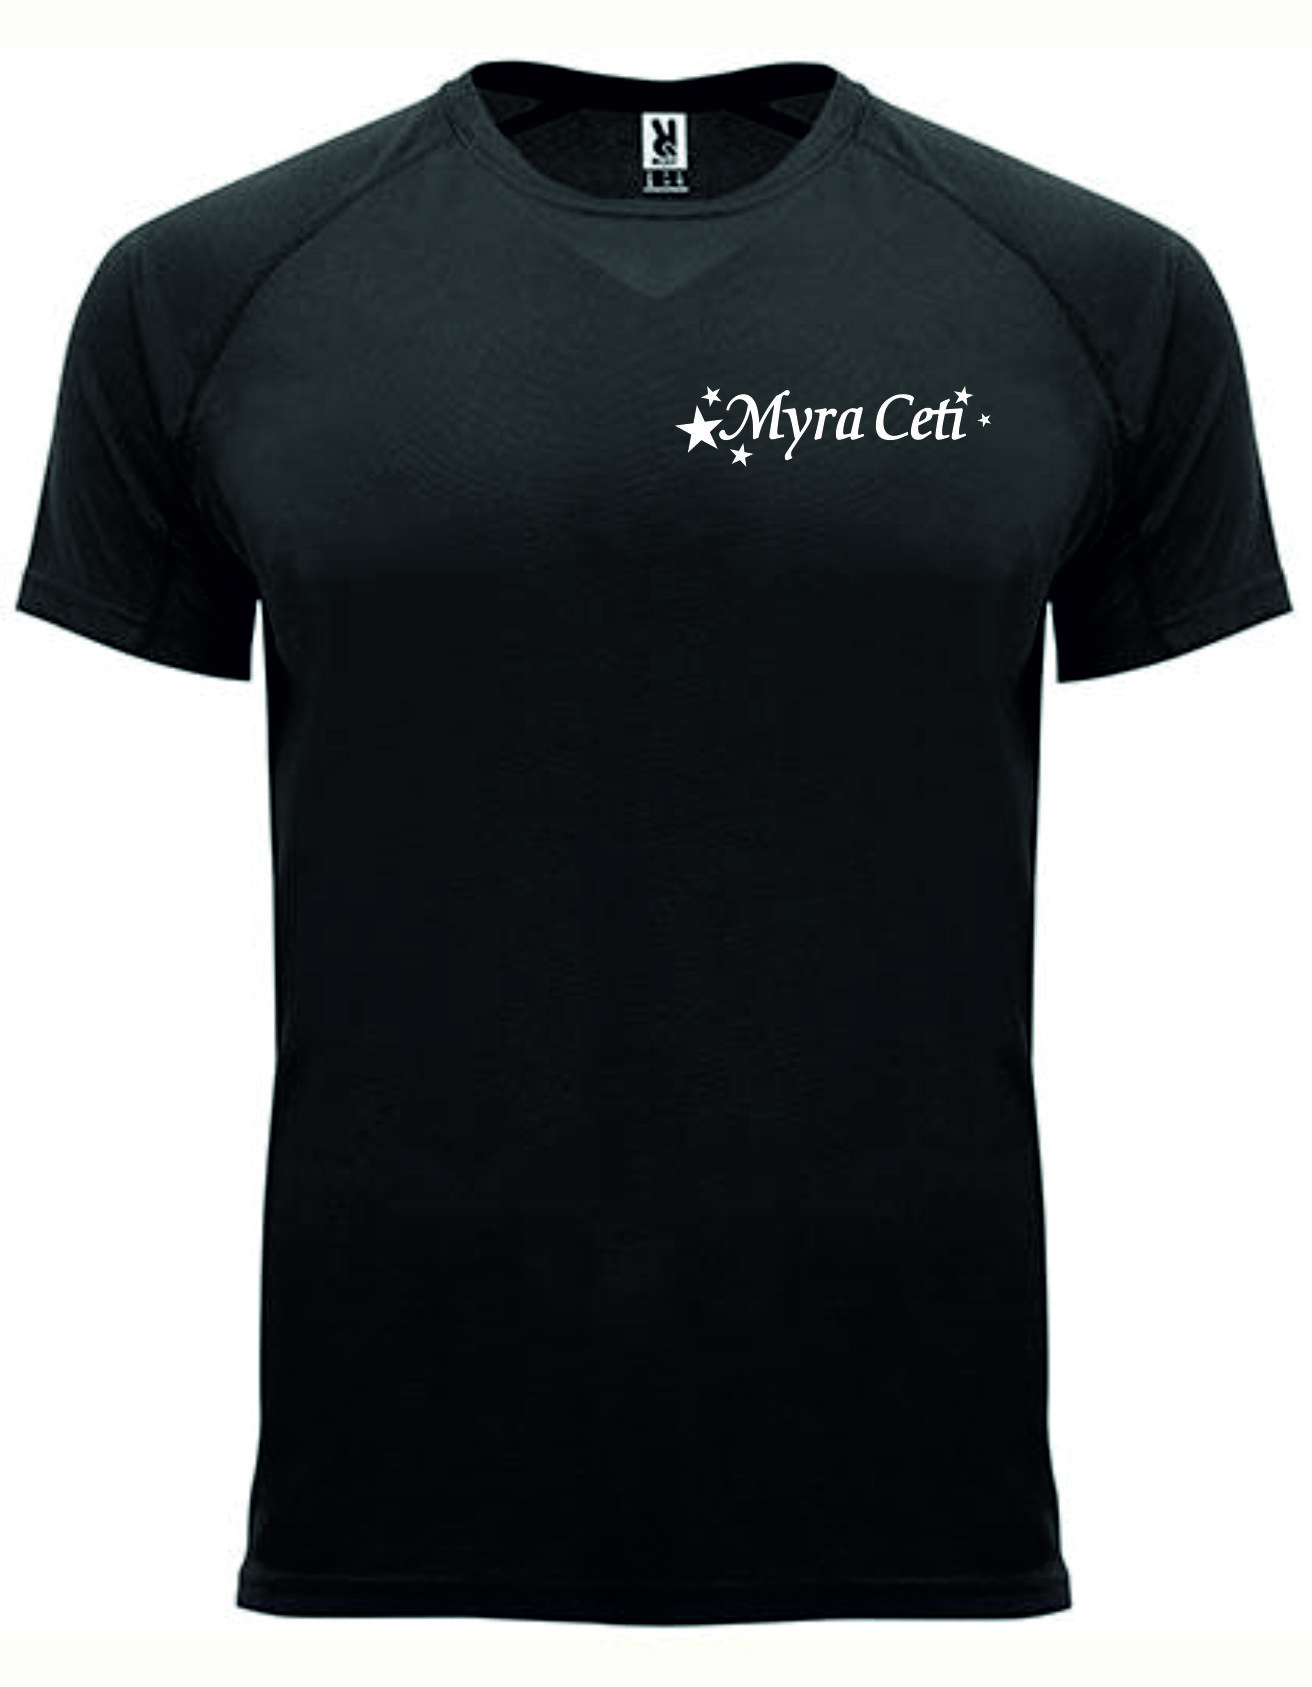 Myra Ceti T-shirt